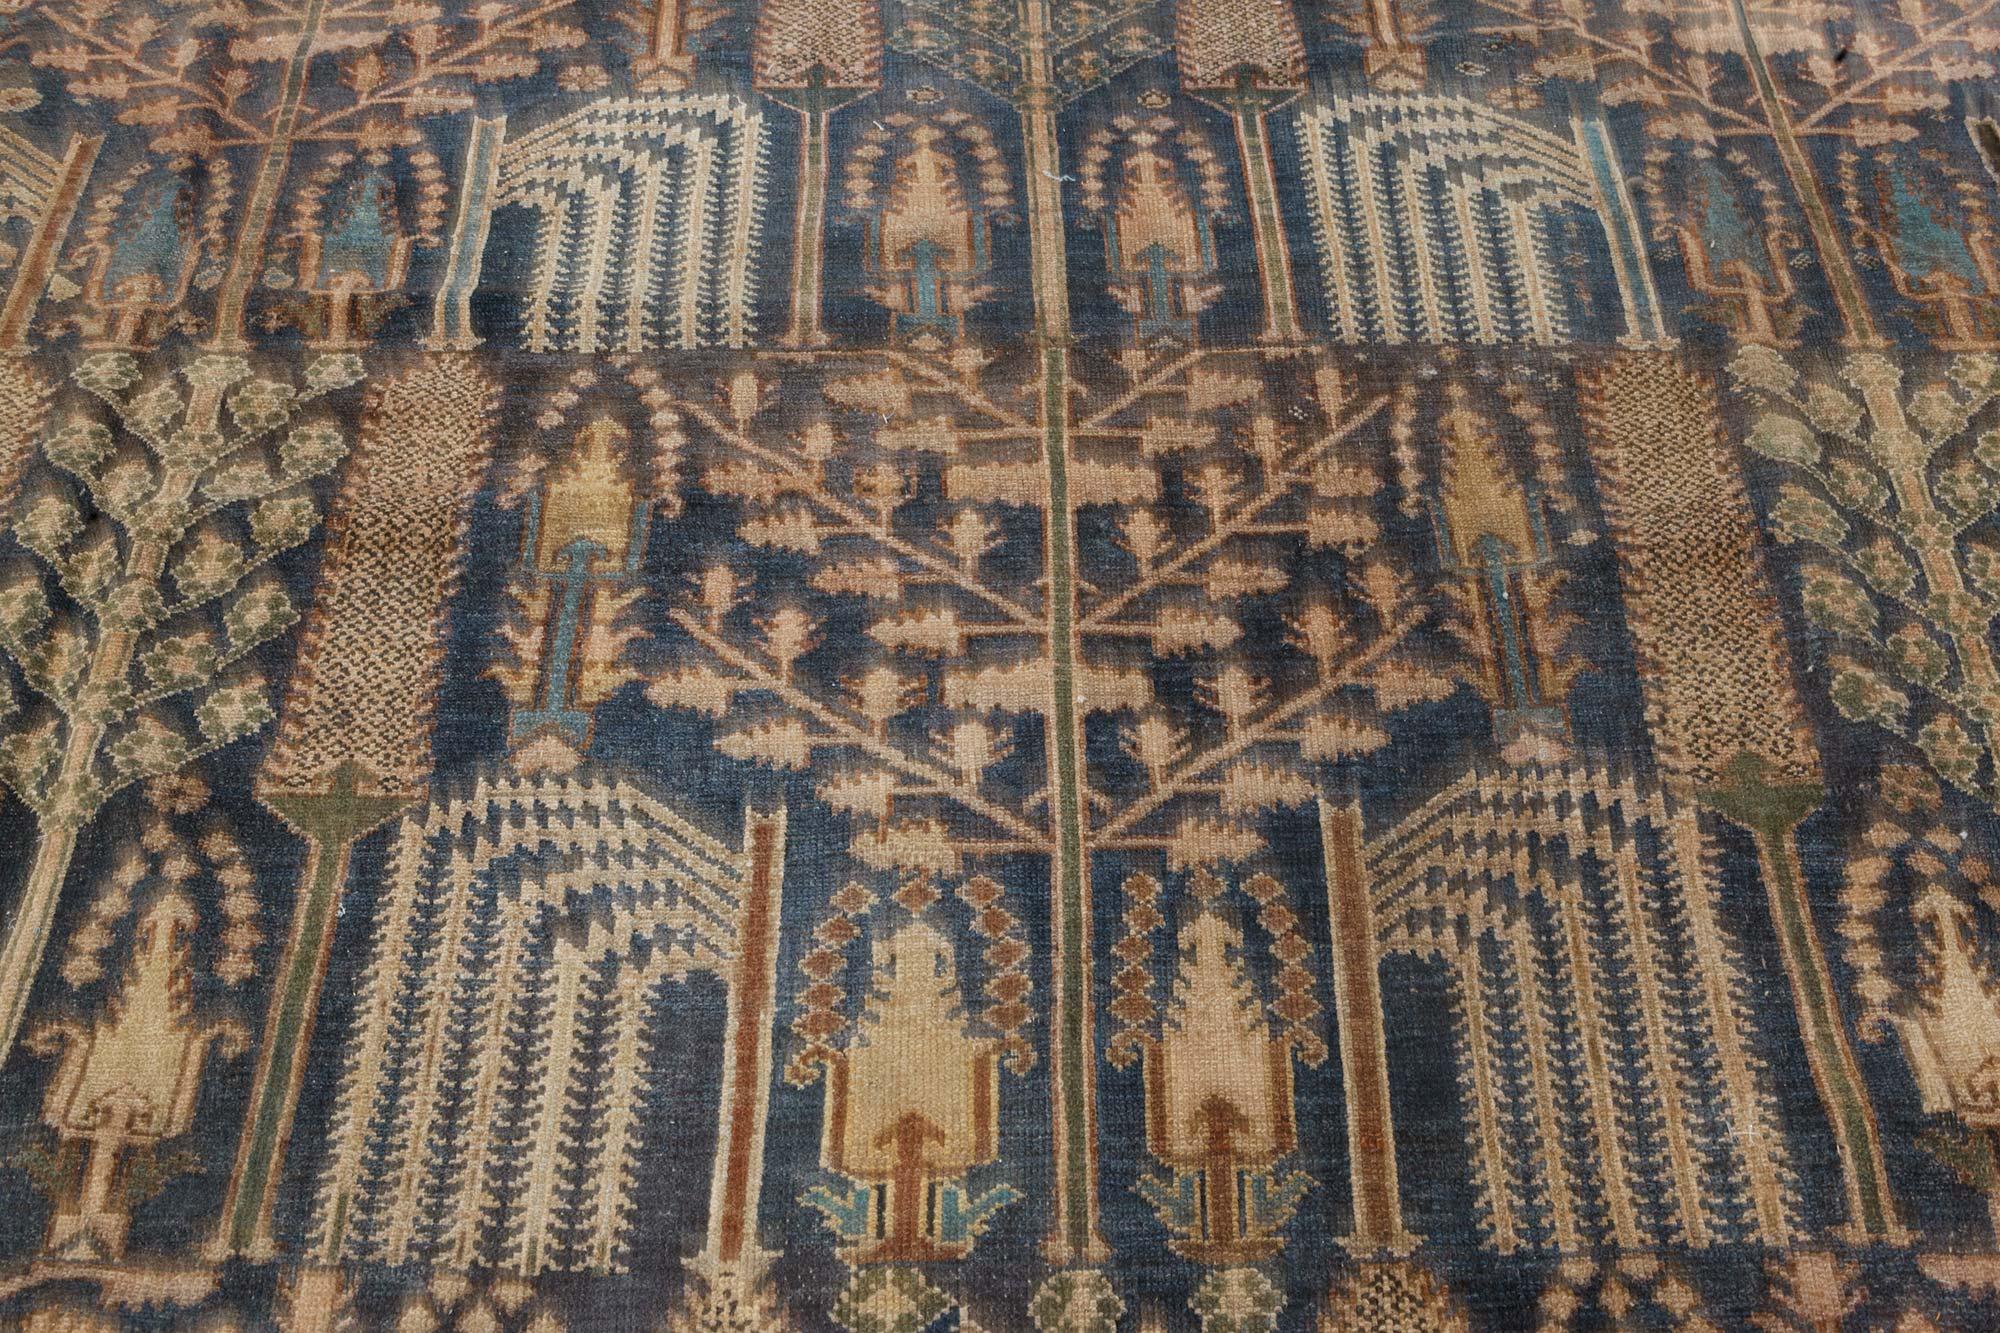 Early 20th century Persian Bakhtiari handmade wool rug.
Size: 11'7